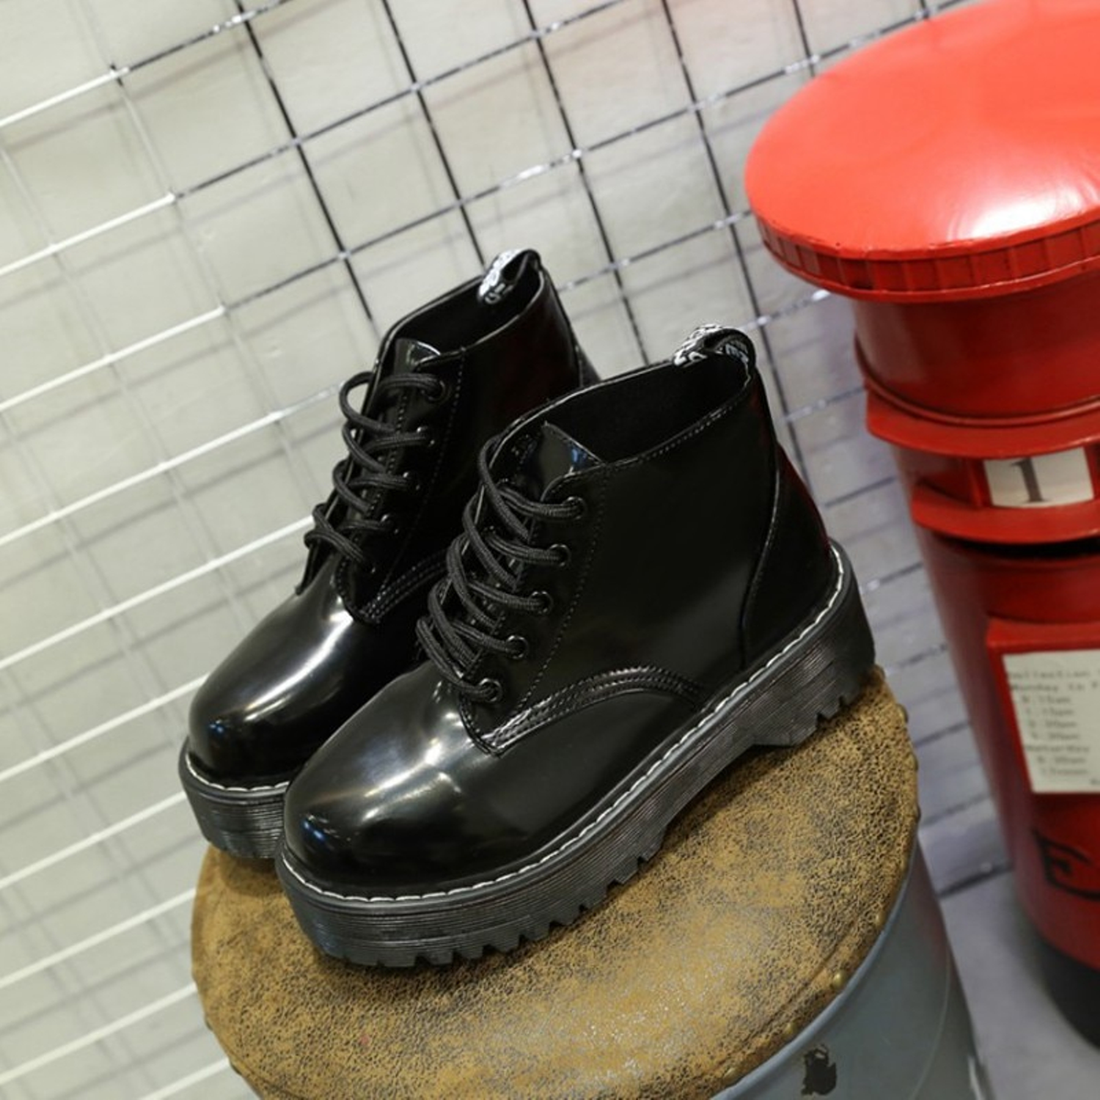 Women's Autumn/Winter Platform Leather Ankle Boots